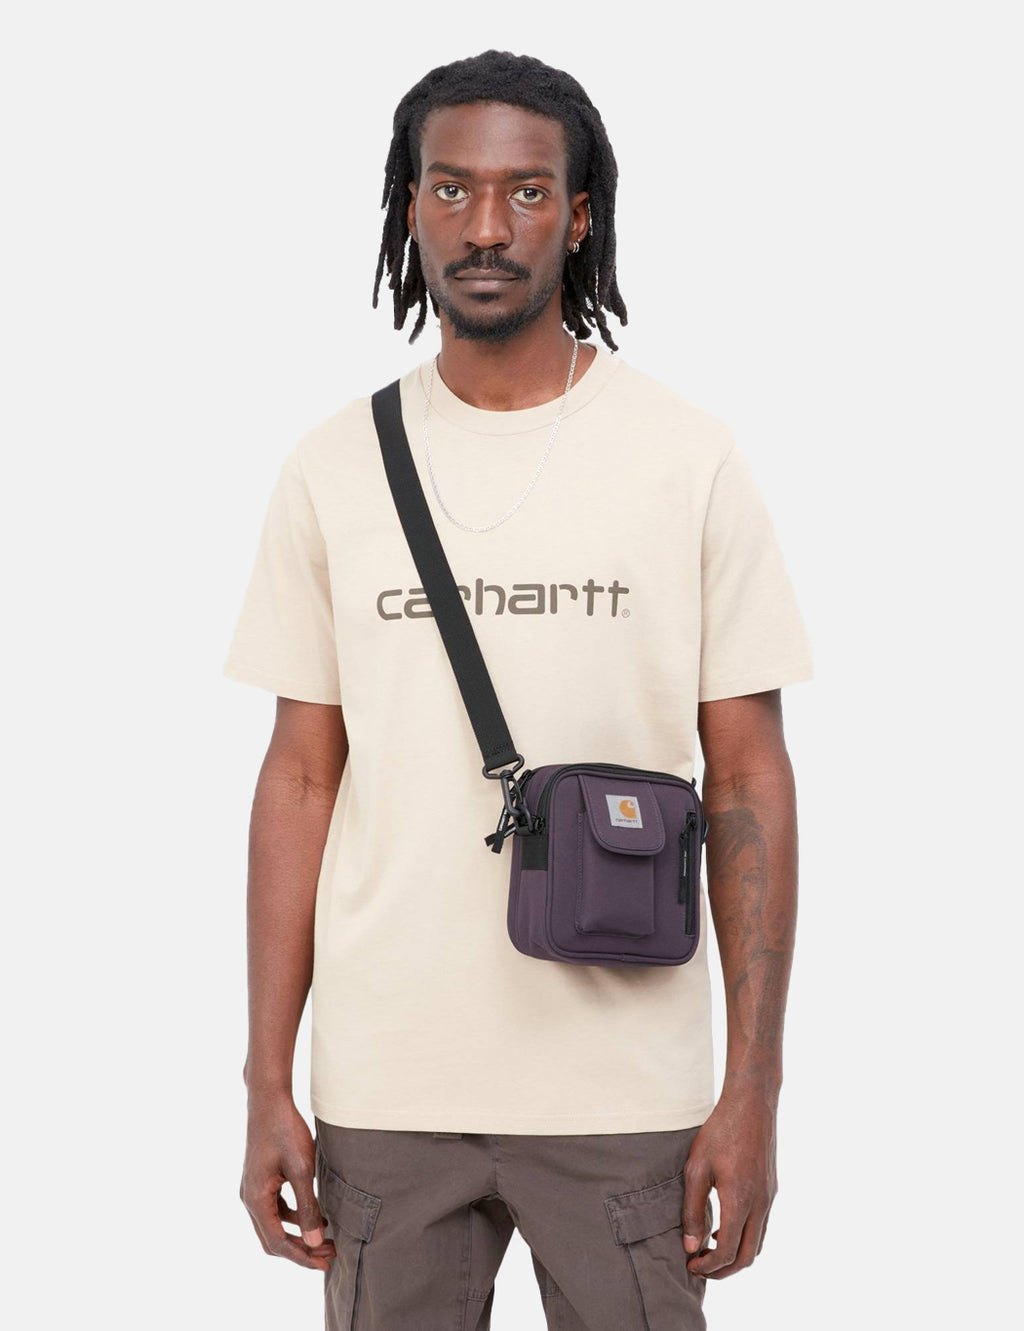 carhartt wip bag outfit  Carhartt bag, Carhartt bag outfit, Cloth